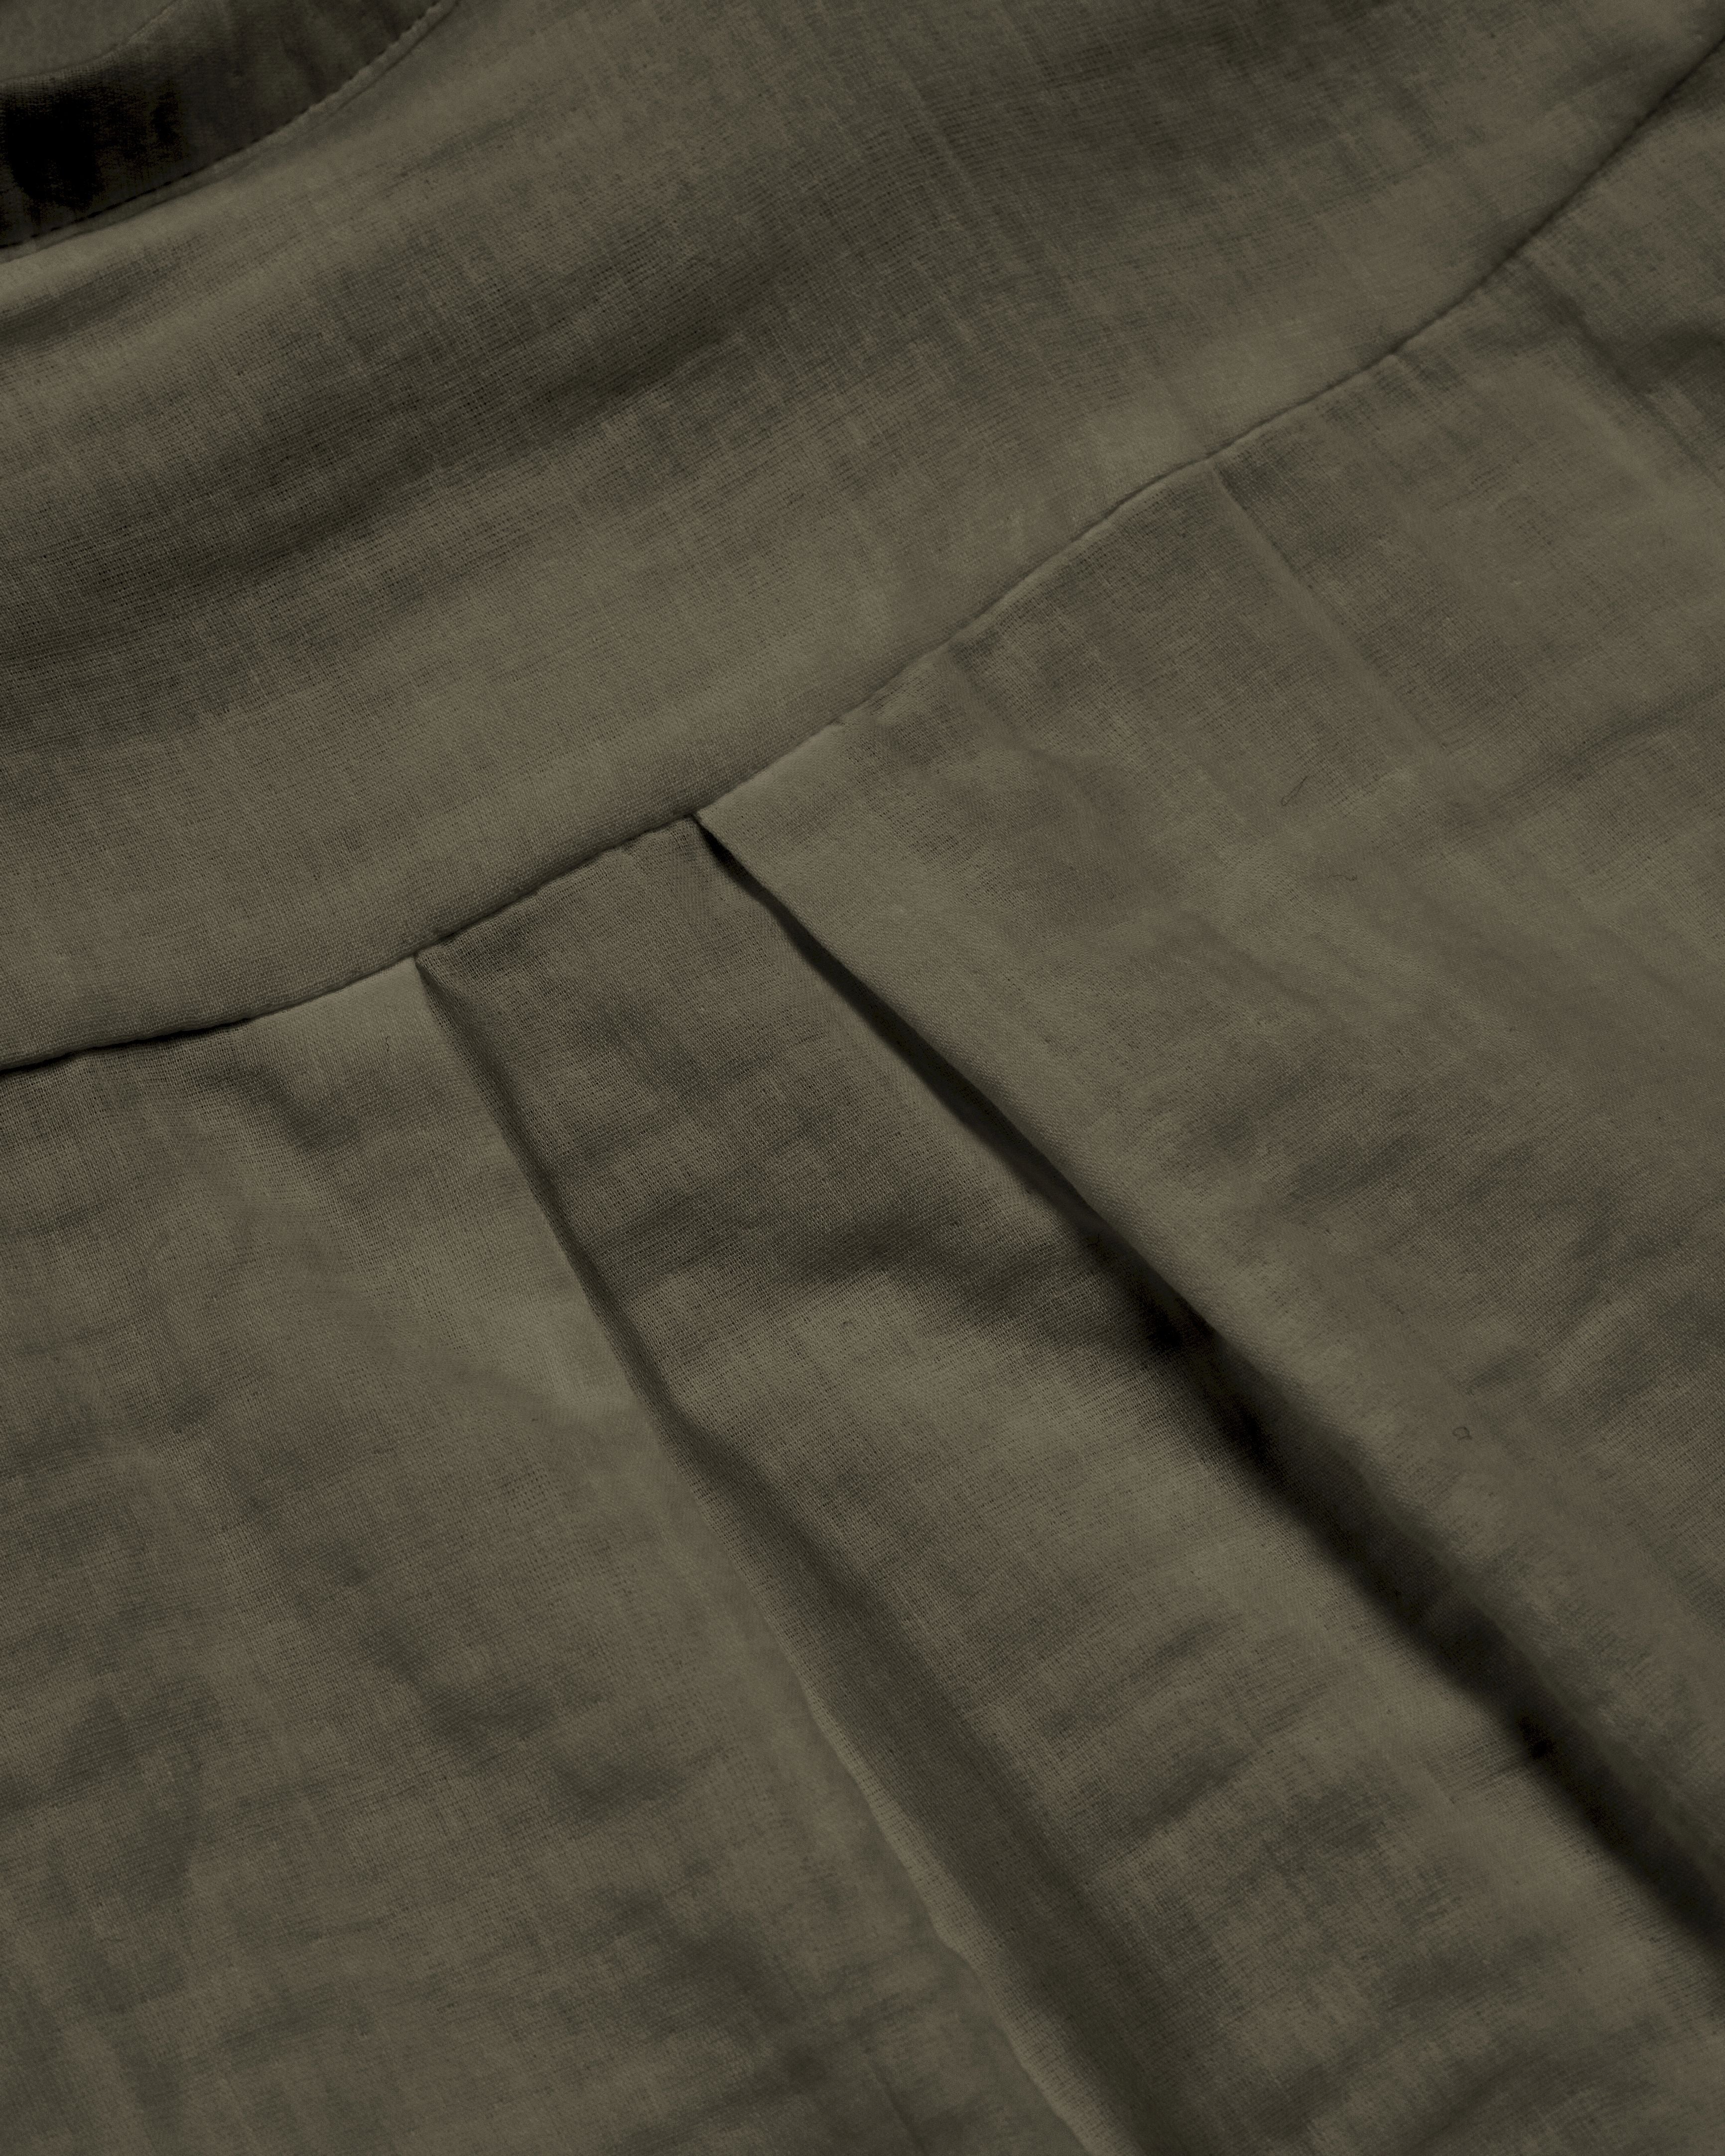 Par Nord Alfrid Shirt Robe L / XL, Bark